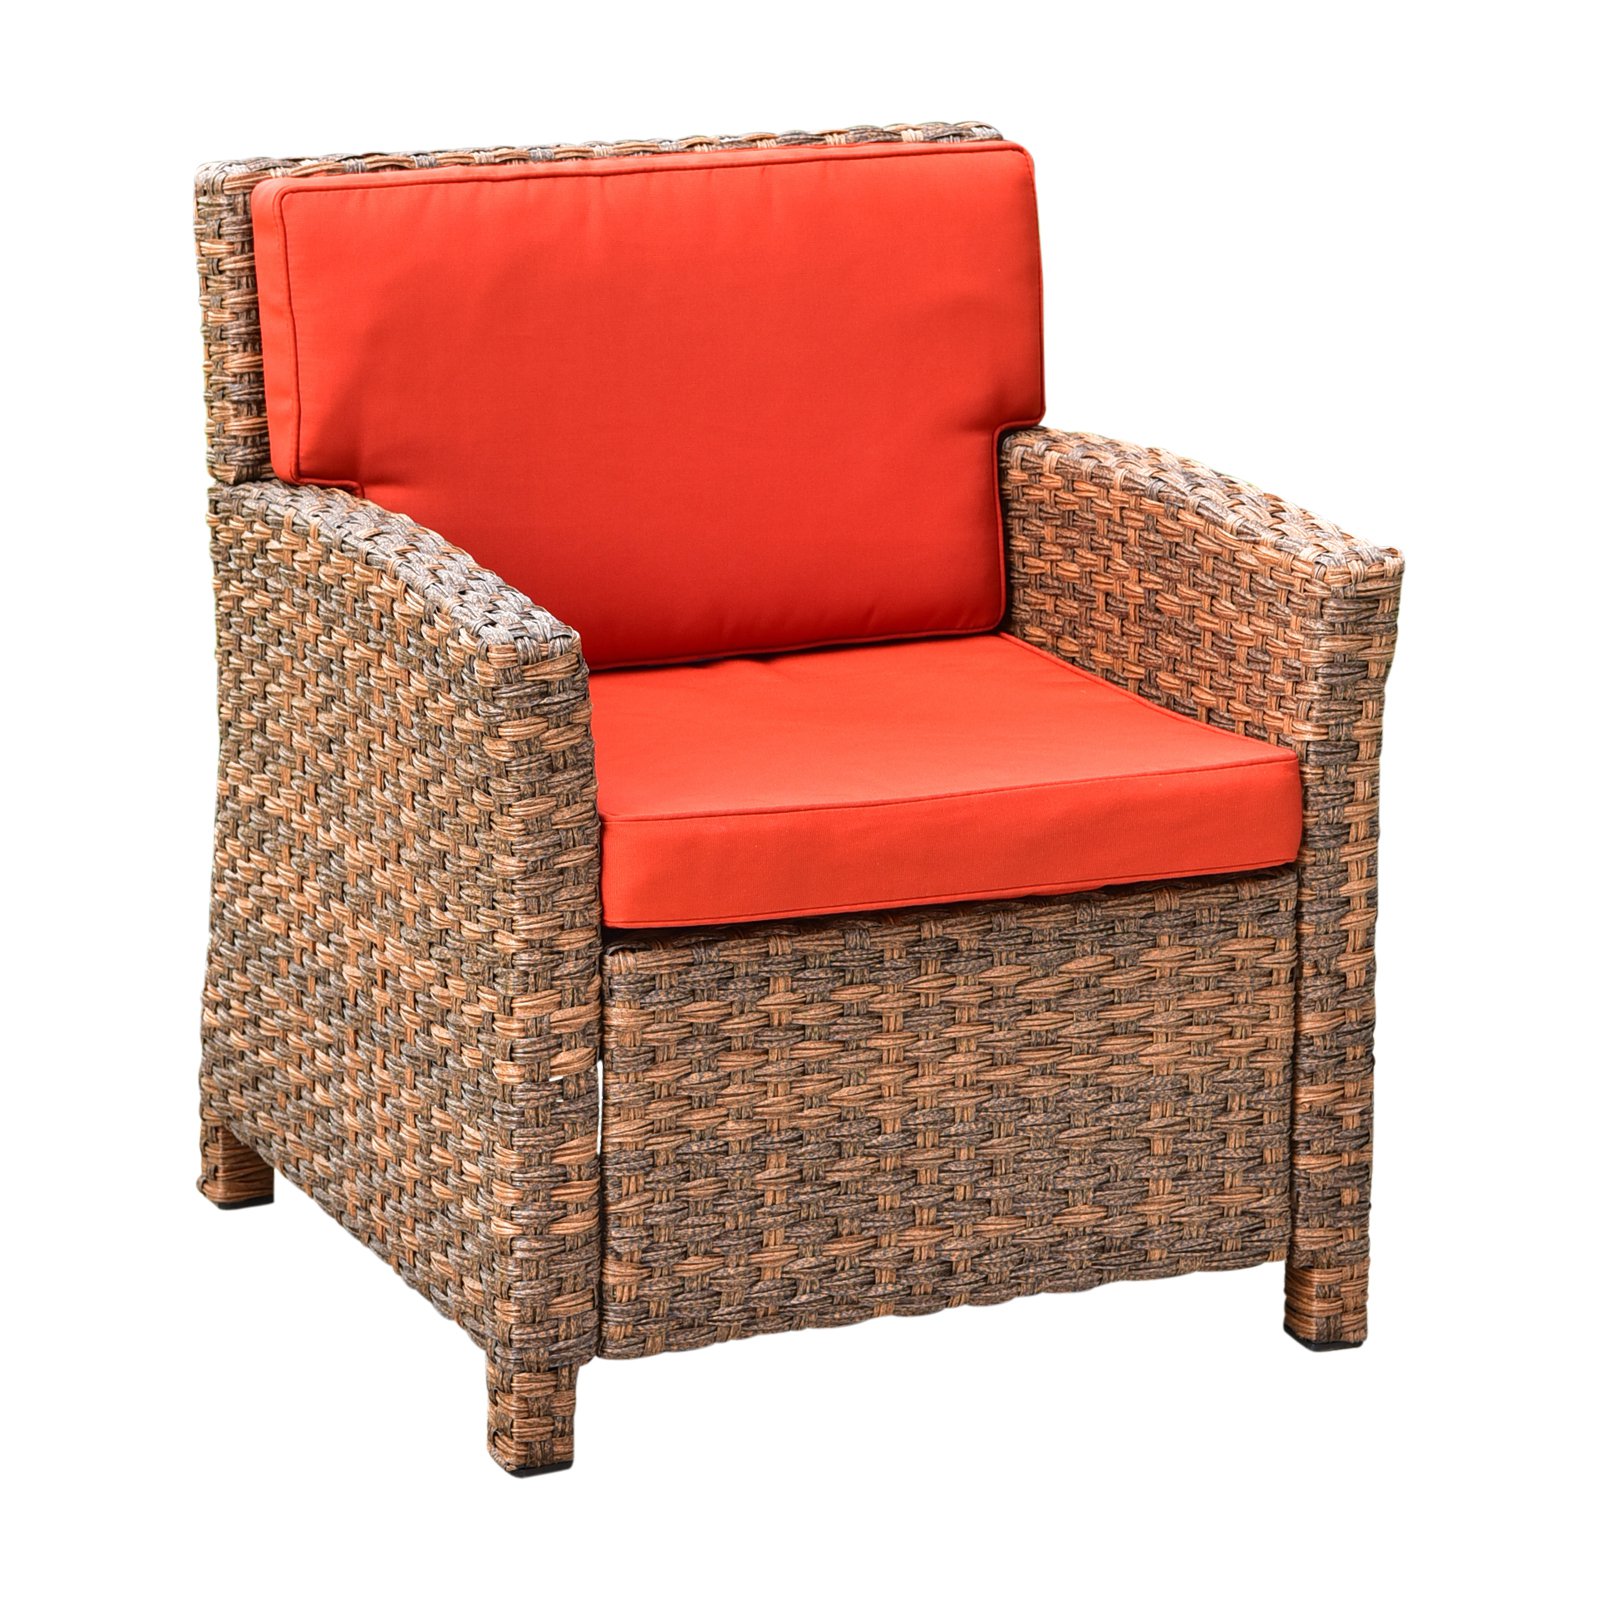 International Caravan Majorca Resin Wicker Patio Chair with Cushion - image 2 of 6